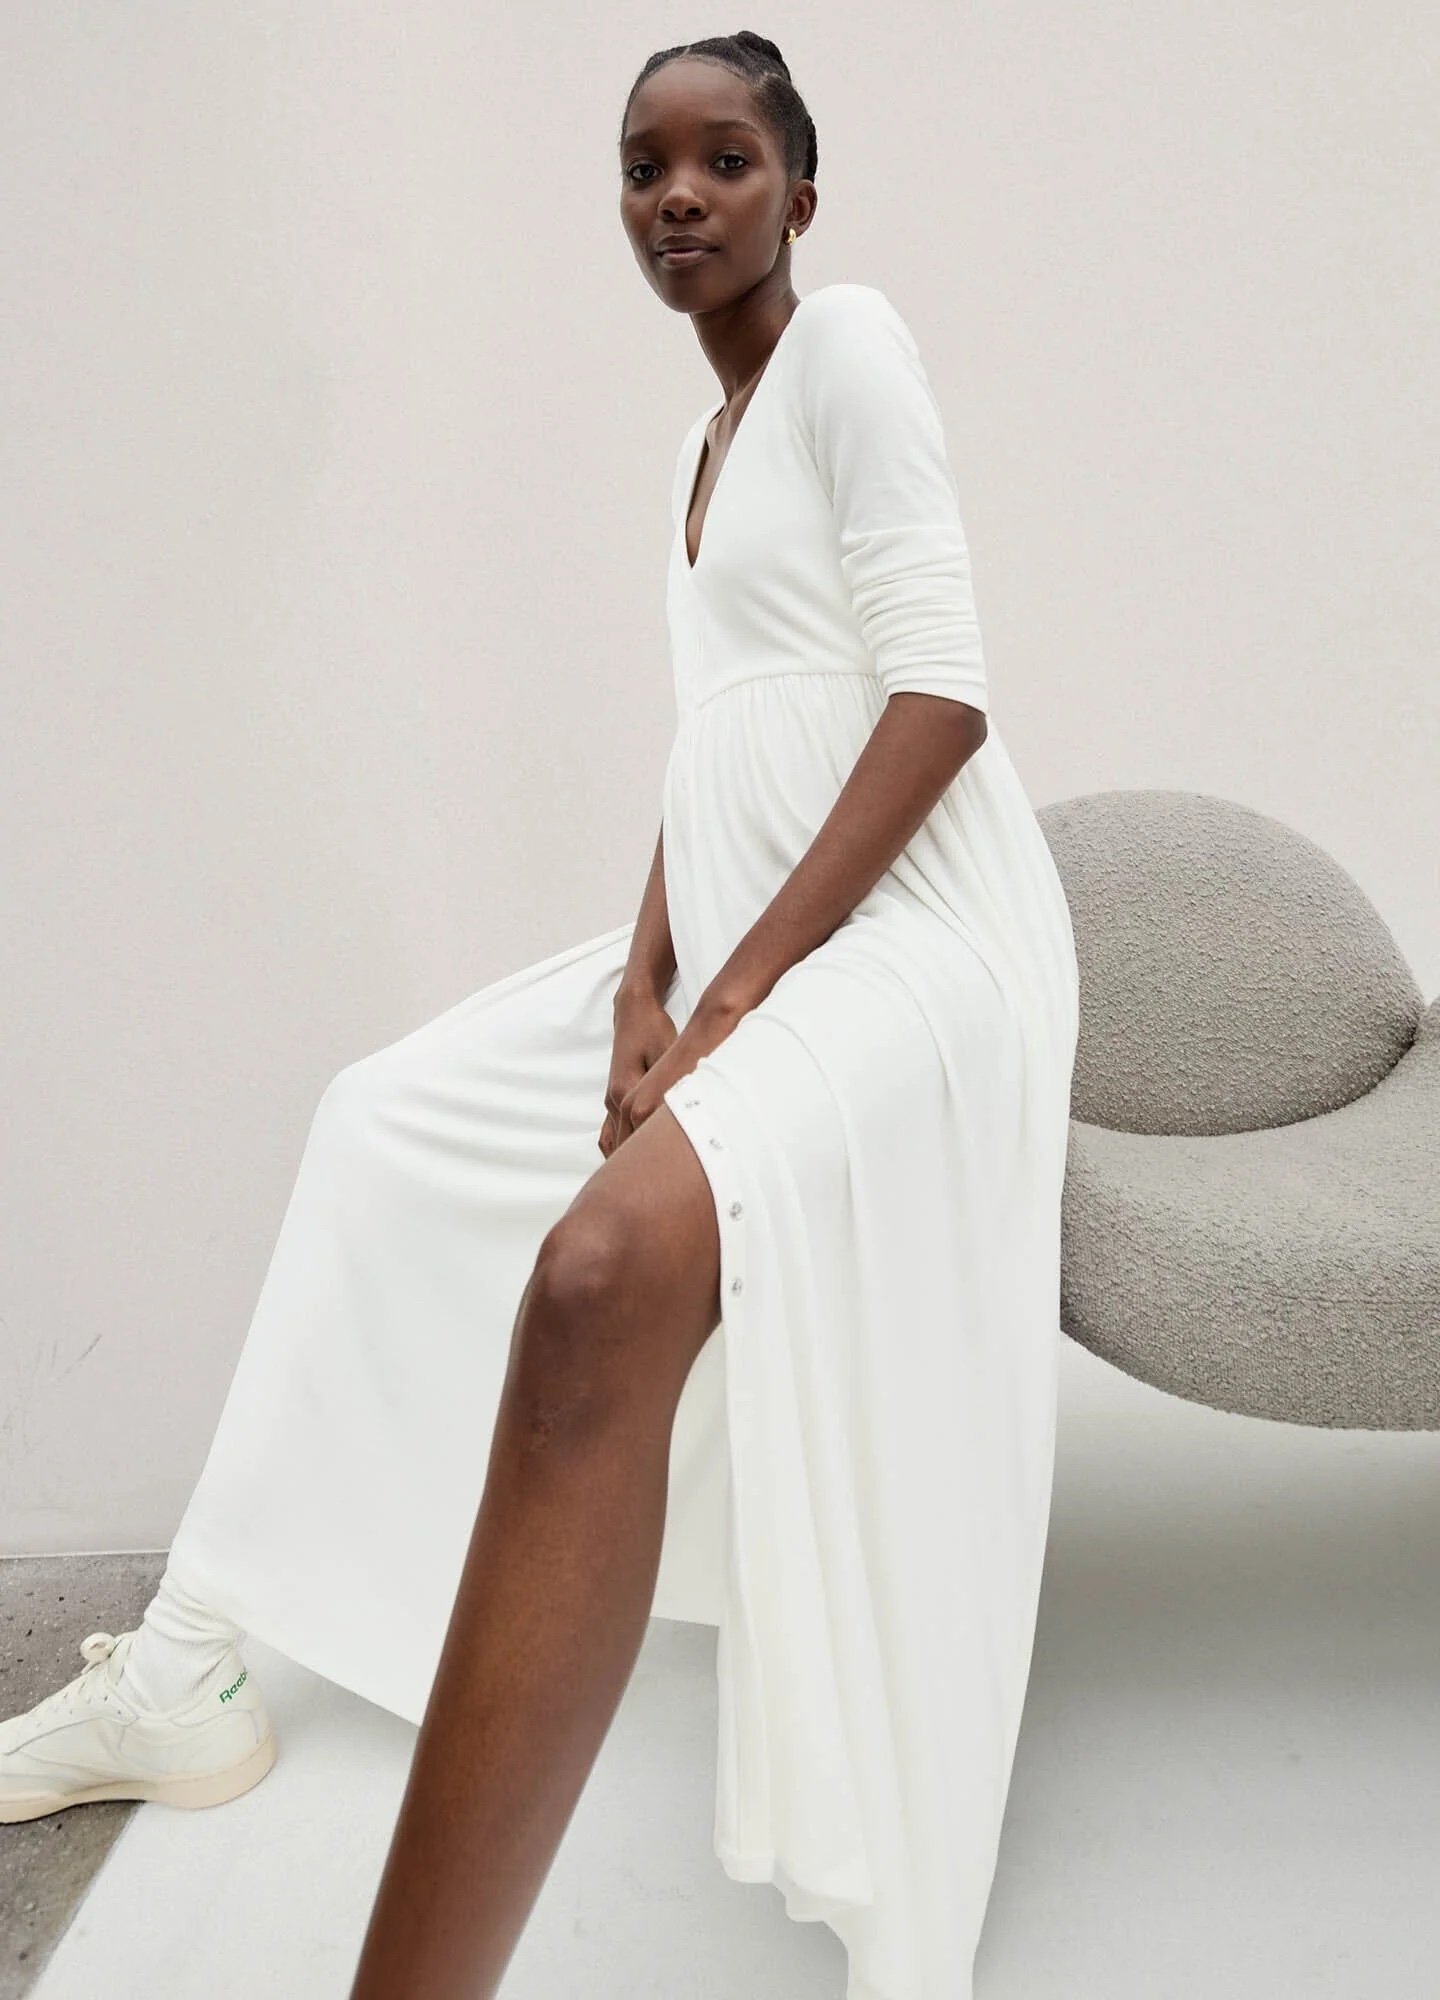 A model in a white dress.